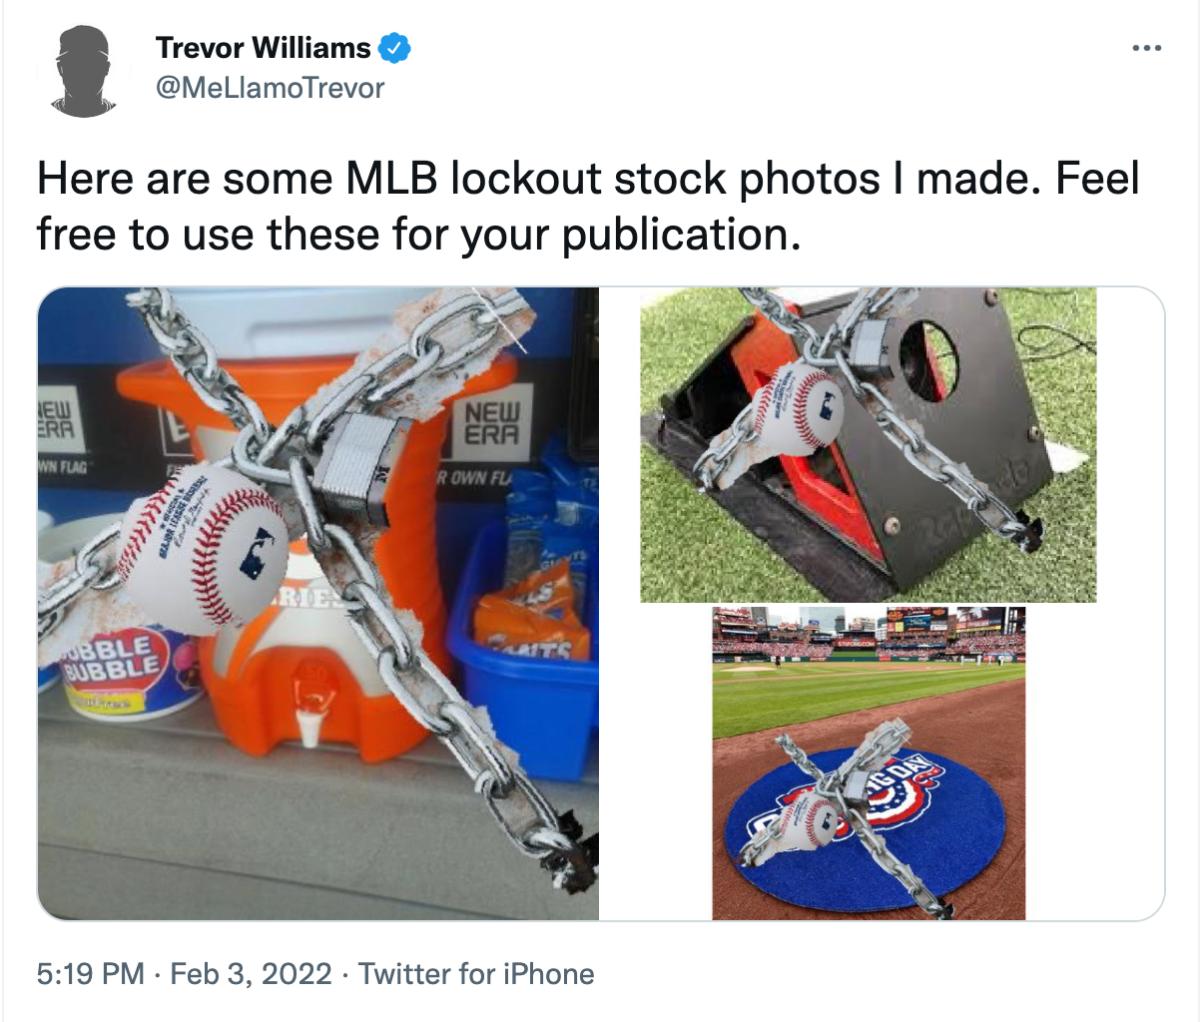 Trevor Williams stock photos tweet